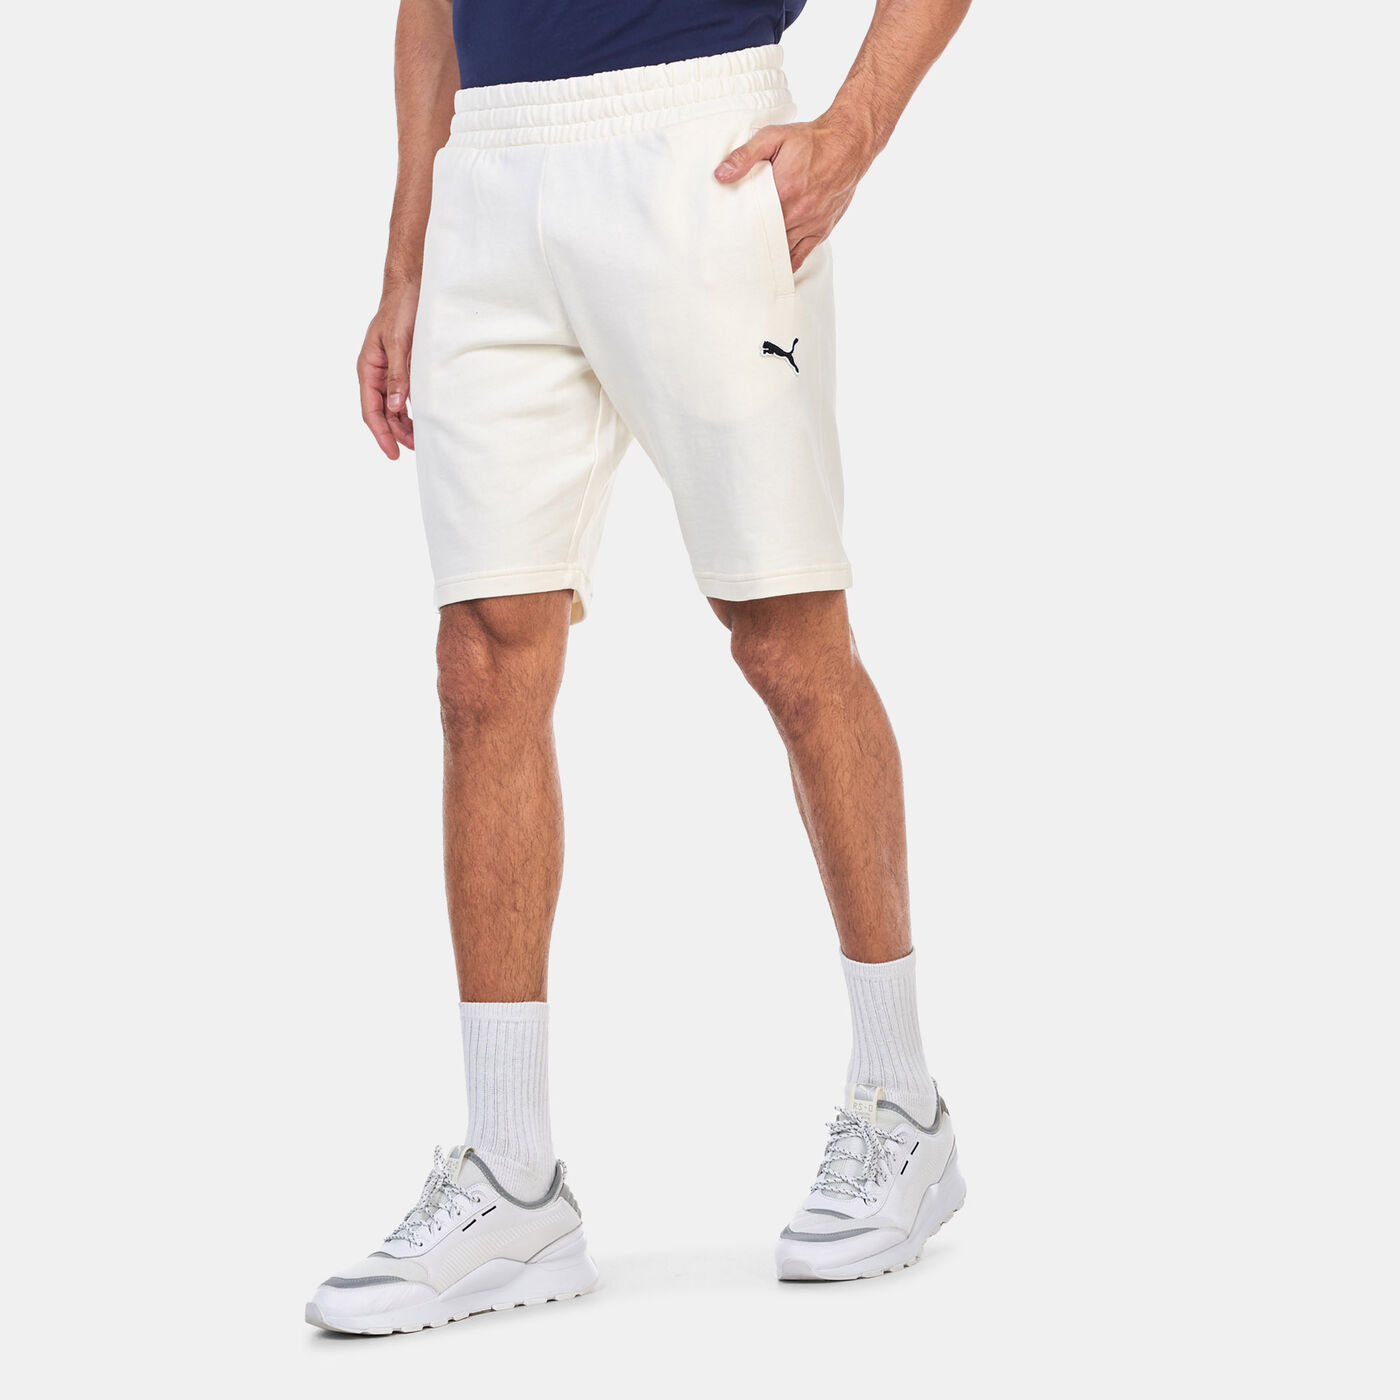 Men's Better Essentials Shorts